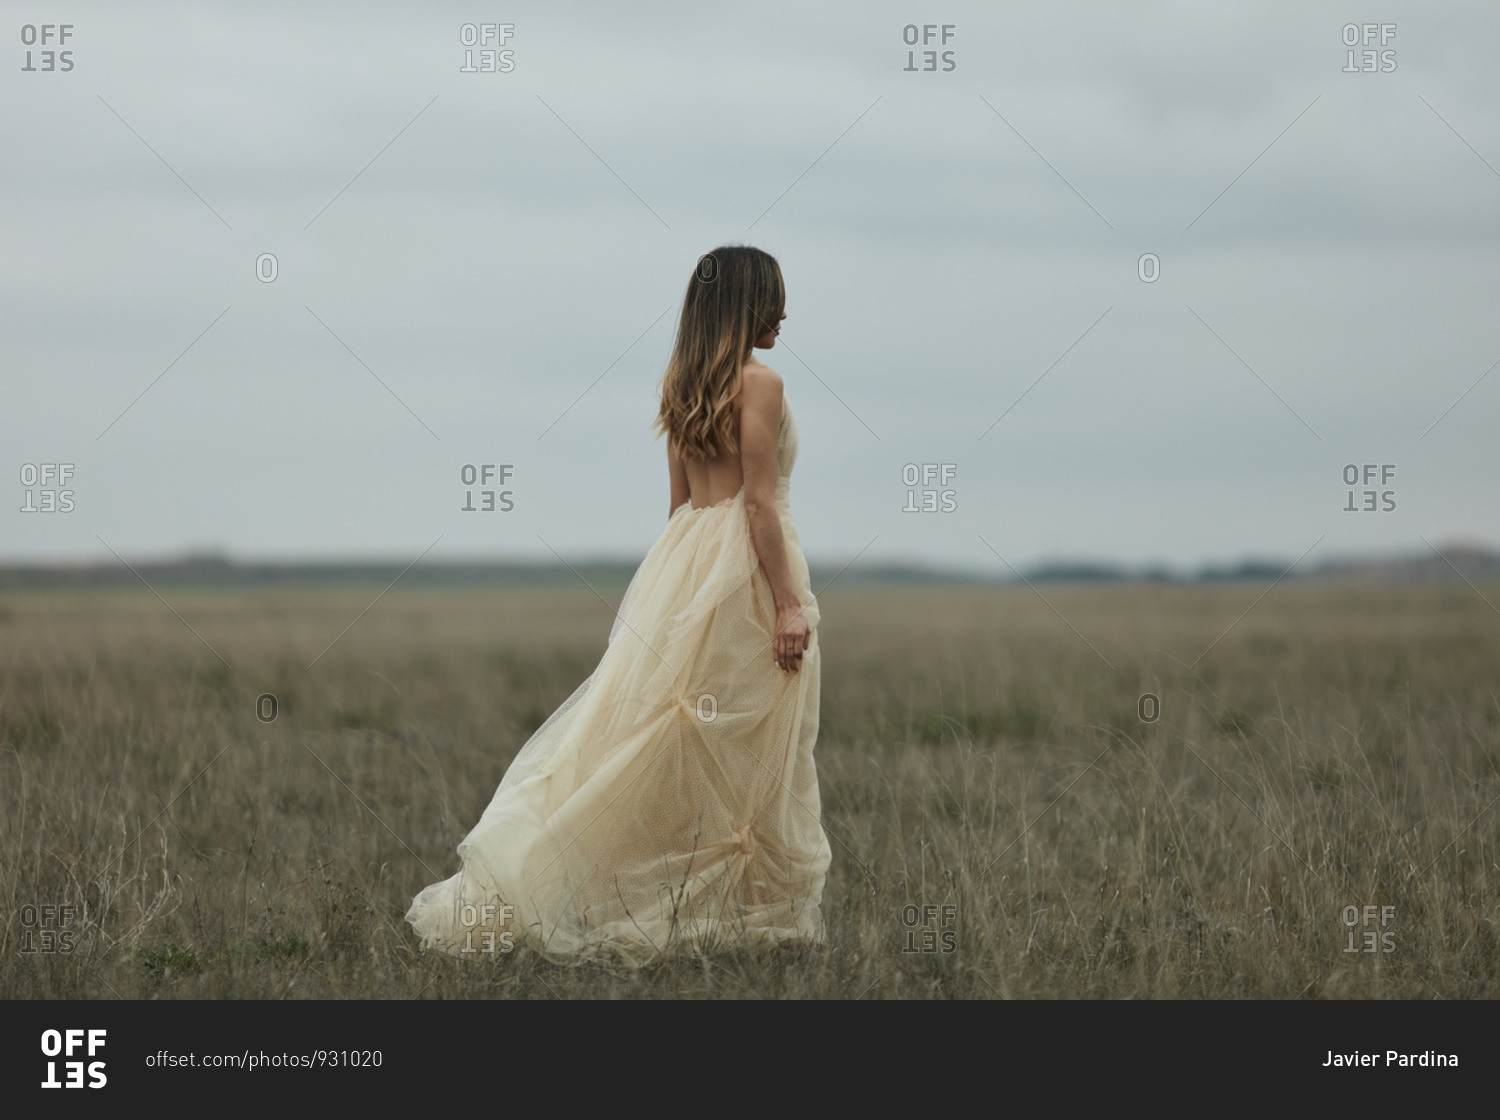 Woman with long hair walking though field wearing shear flowy dress ...